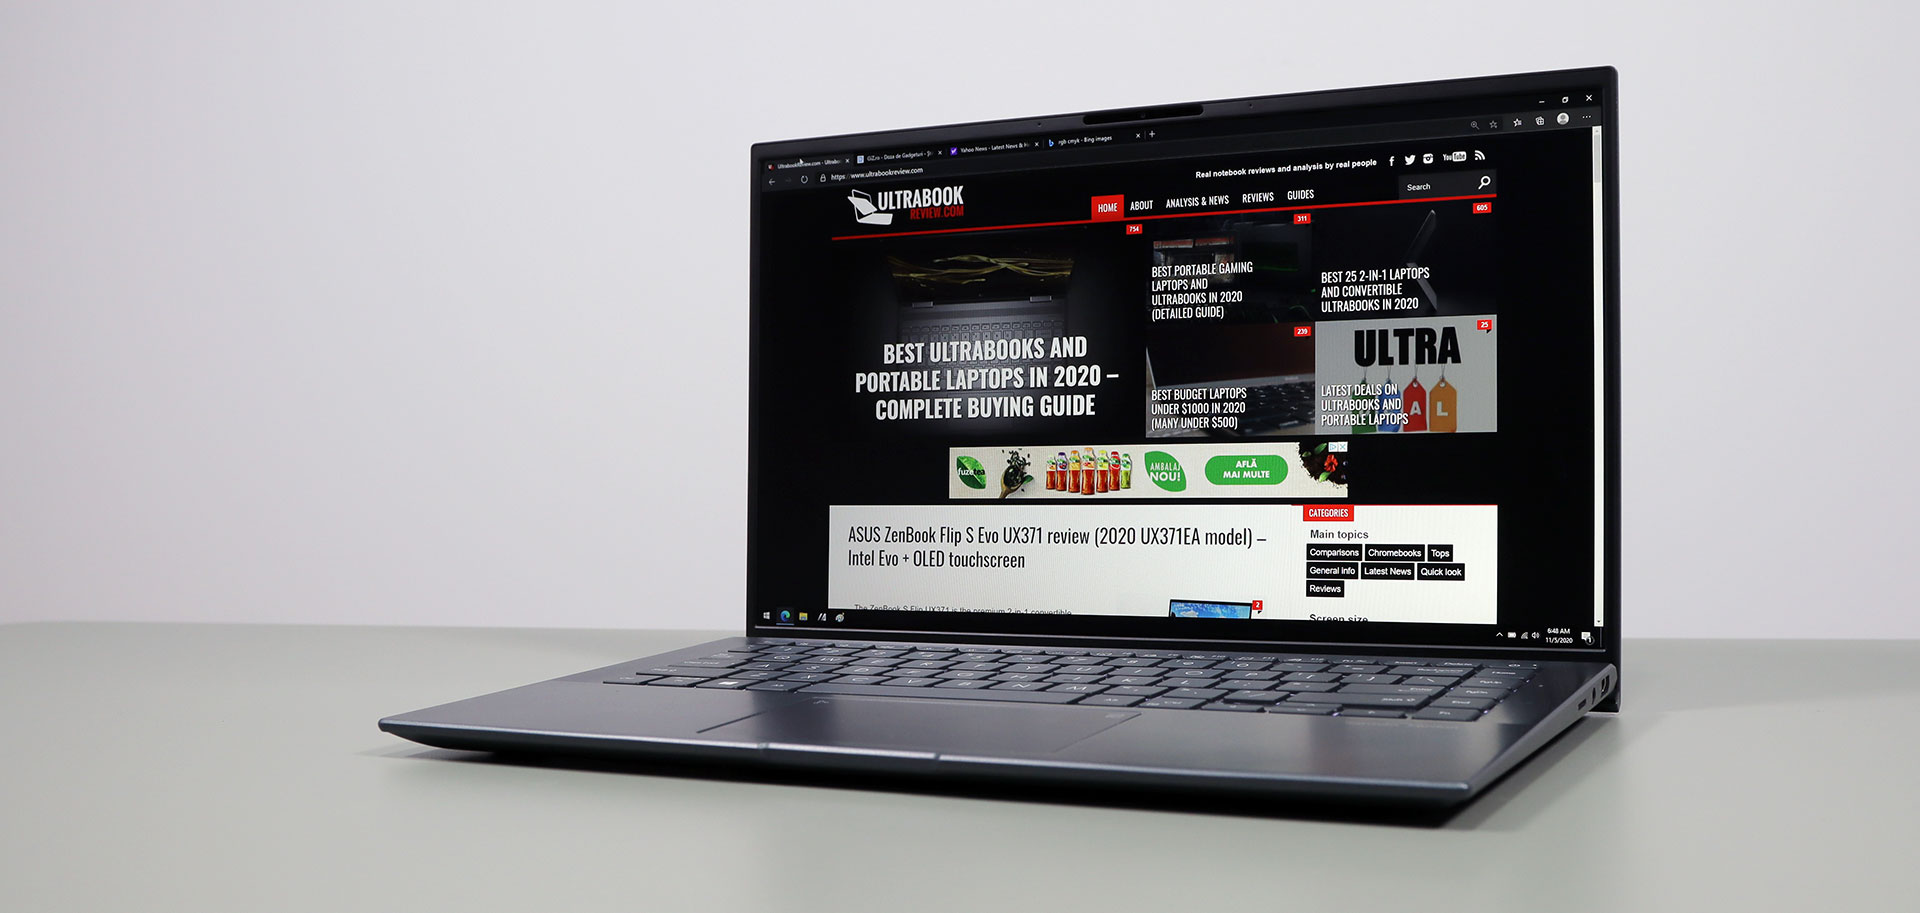 Asus ZenBook 14 Ultralight UX435EAL review